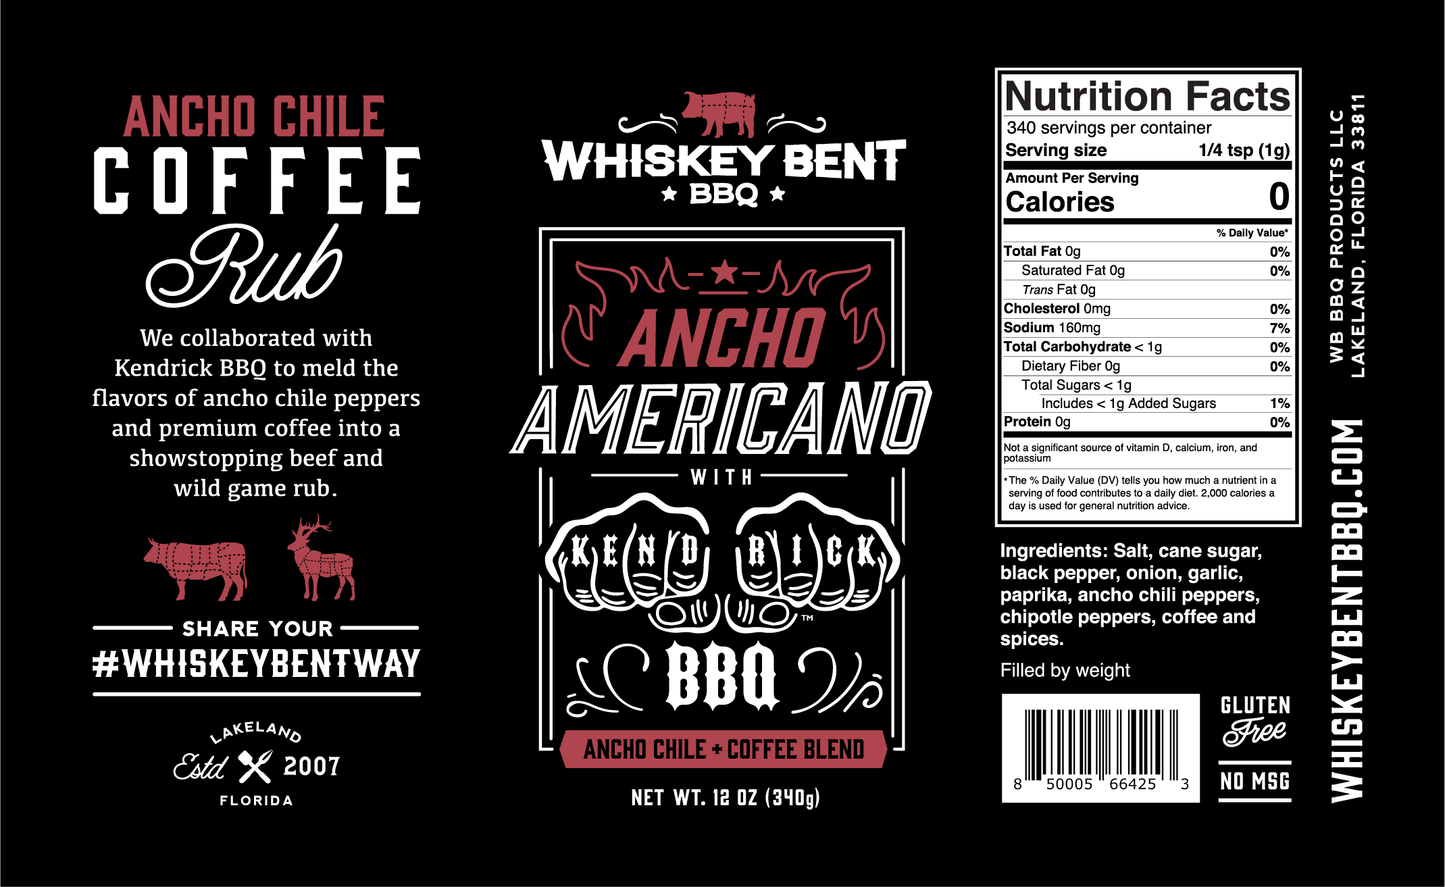 Ancho Americano - Ancho Chile Coffee Blend